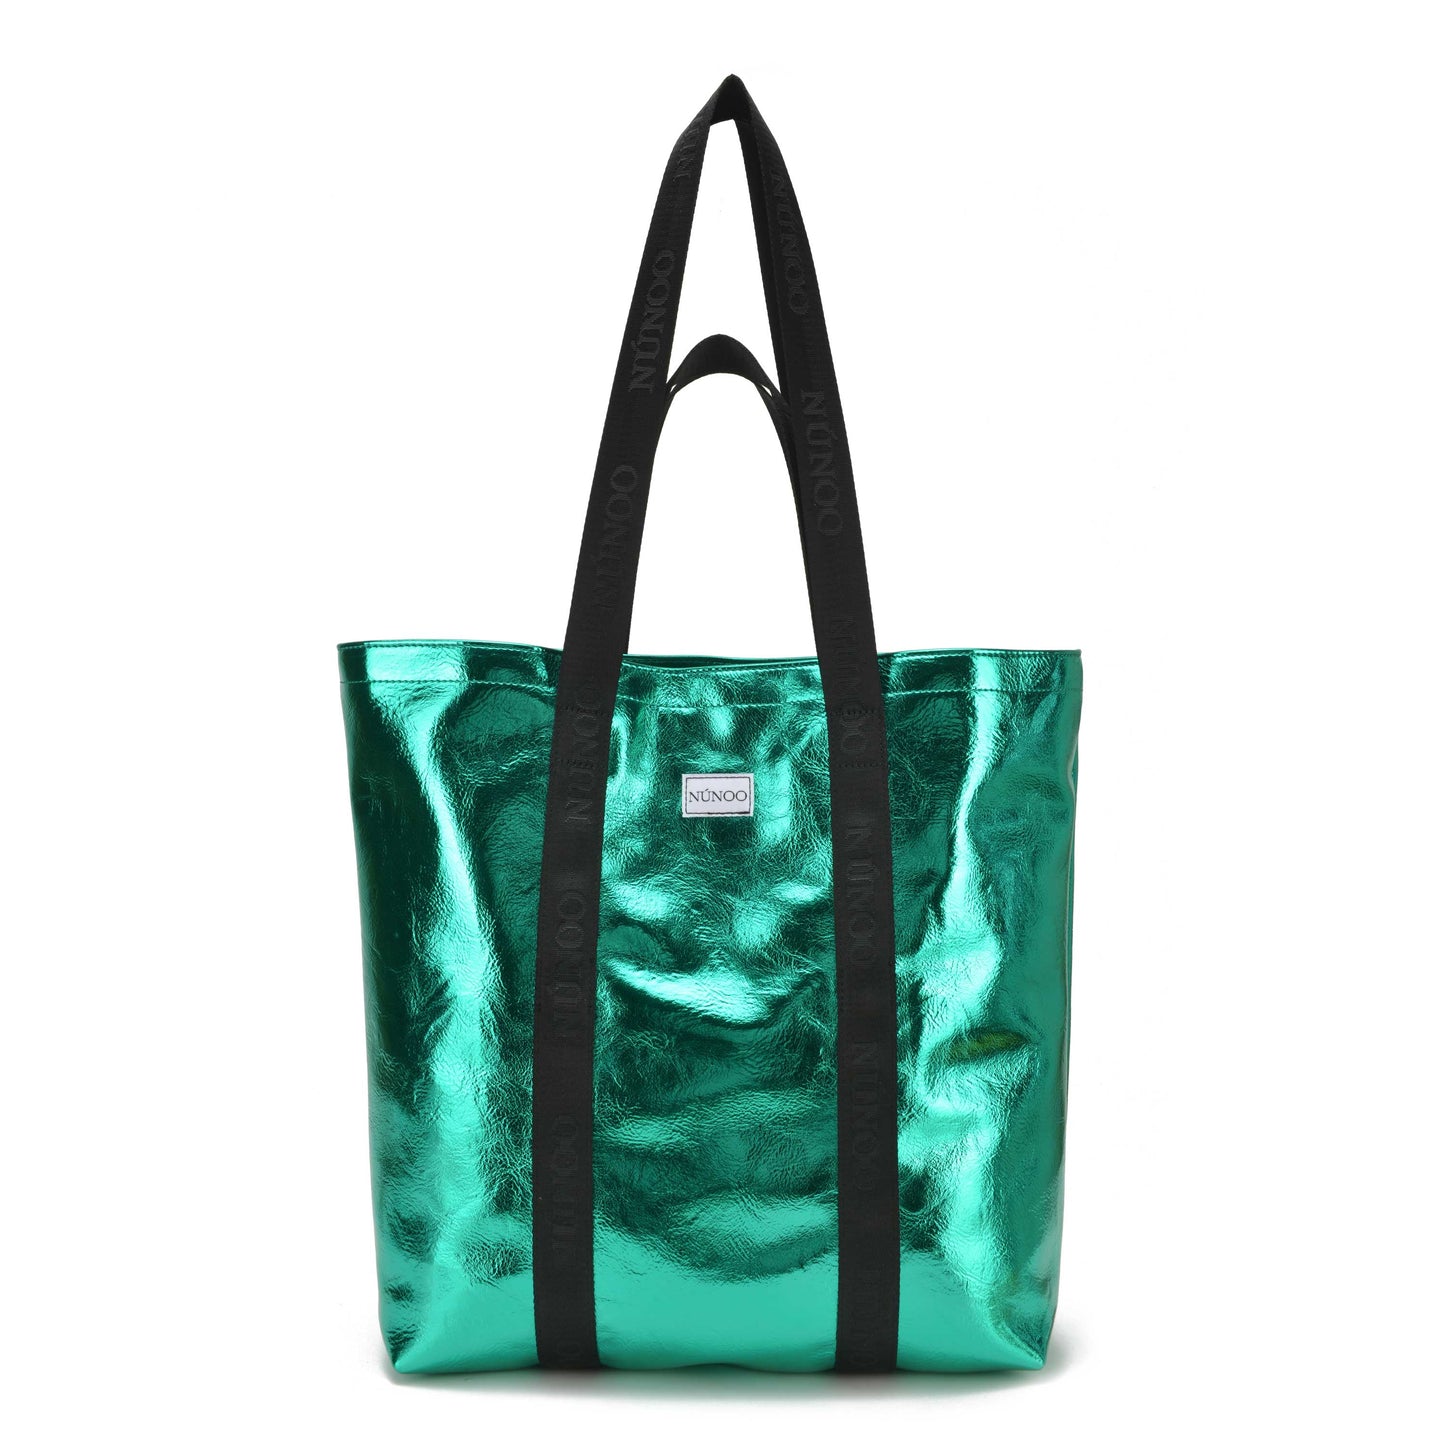 Núnoo Shopper Recycled Cool Green Shoulder bags Green